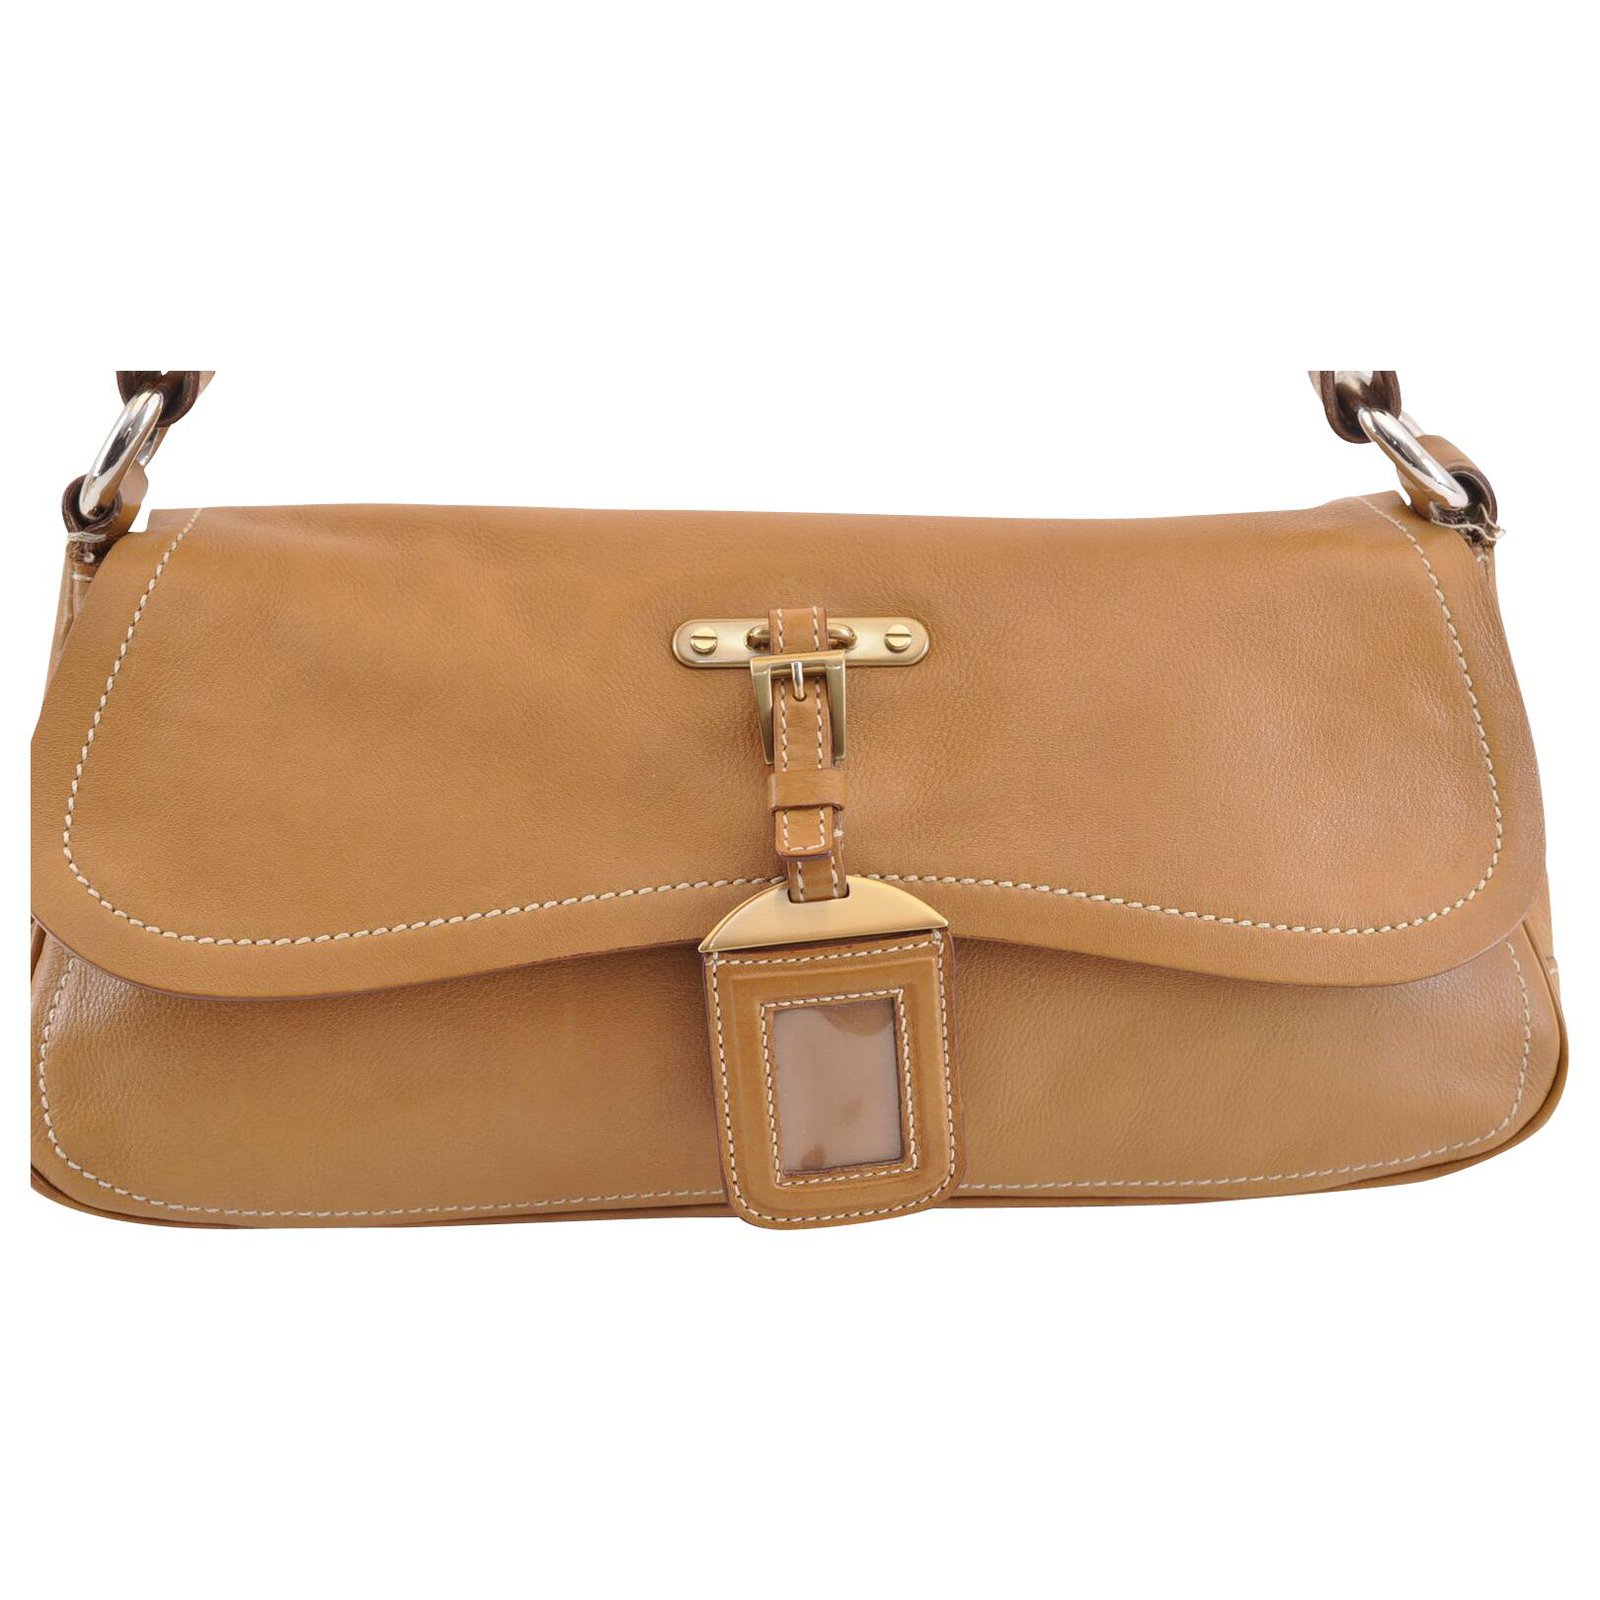 prada tan leather handbag